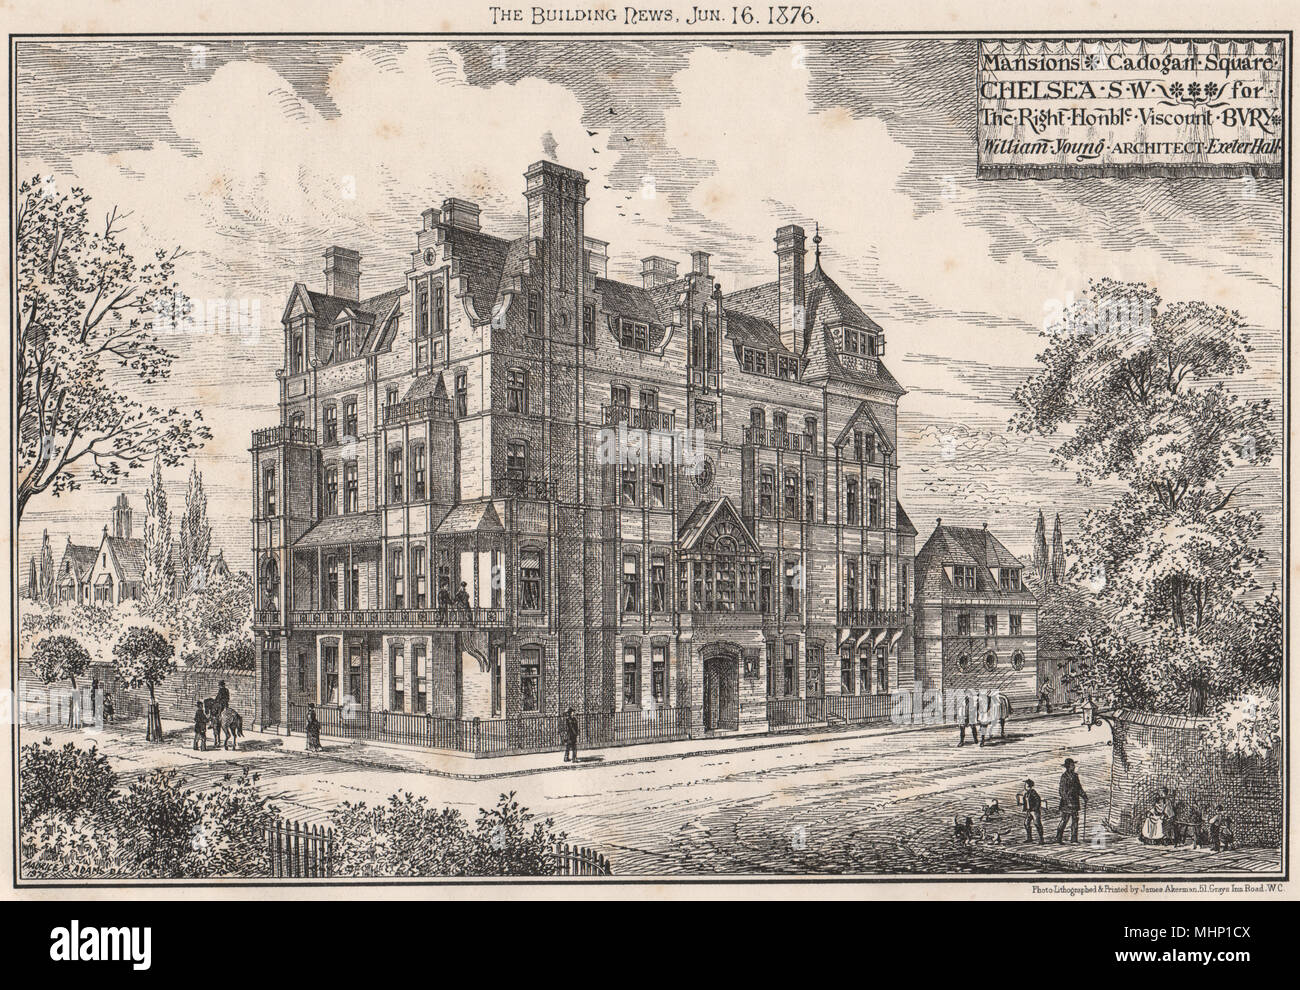 Mansions, Cadogan Square, Chelsea (Viscount Bury); William Young Architect 1876 Stock Photo